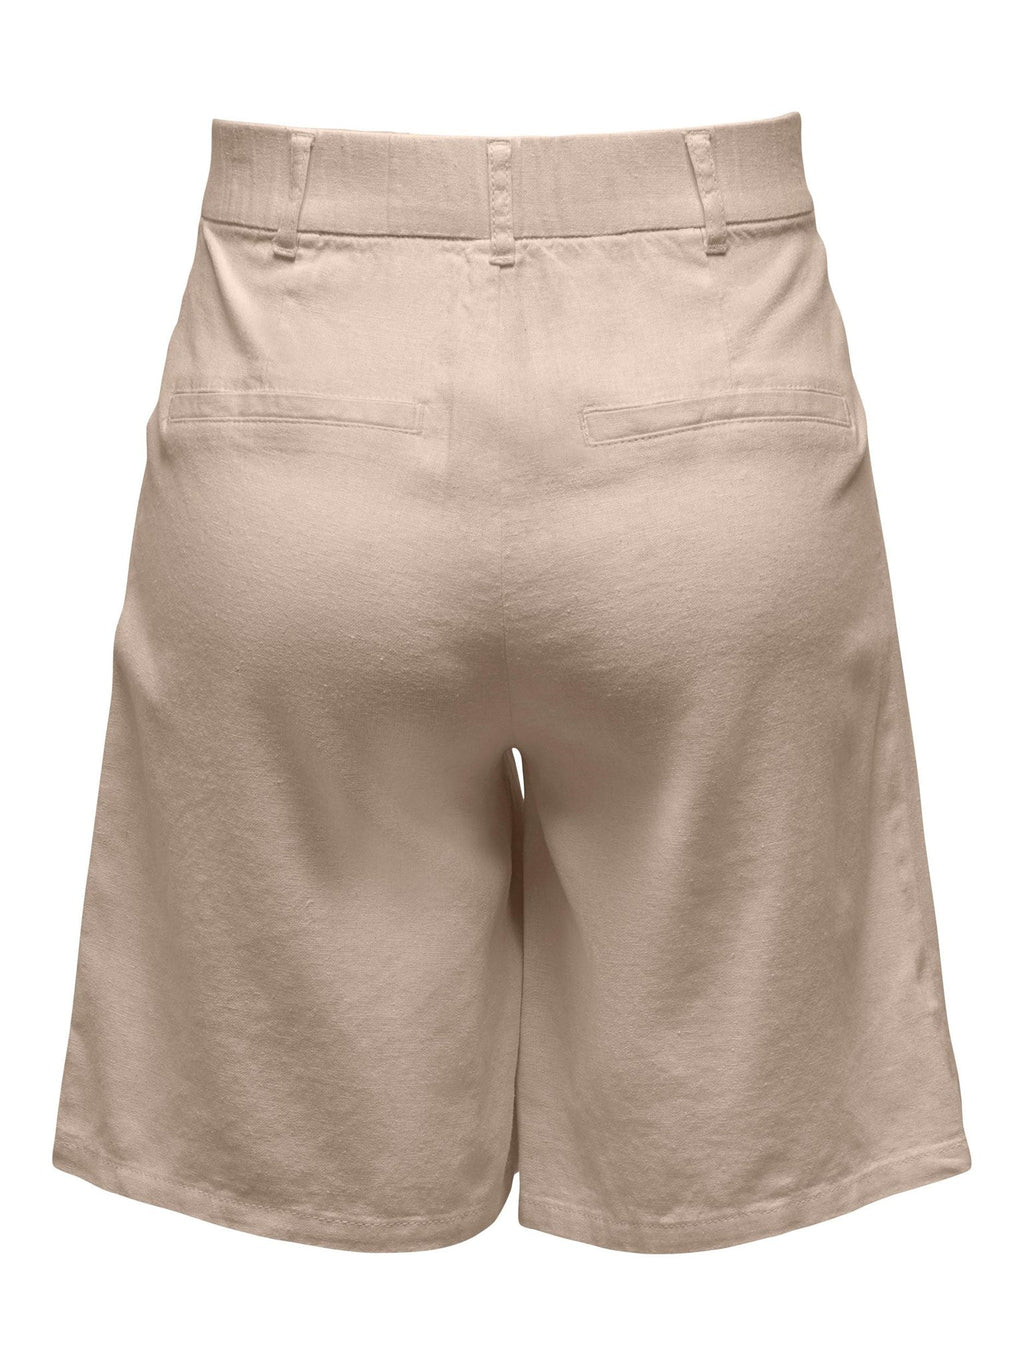 CARO HIGHAIL Shorts - Oxford Tan